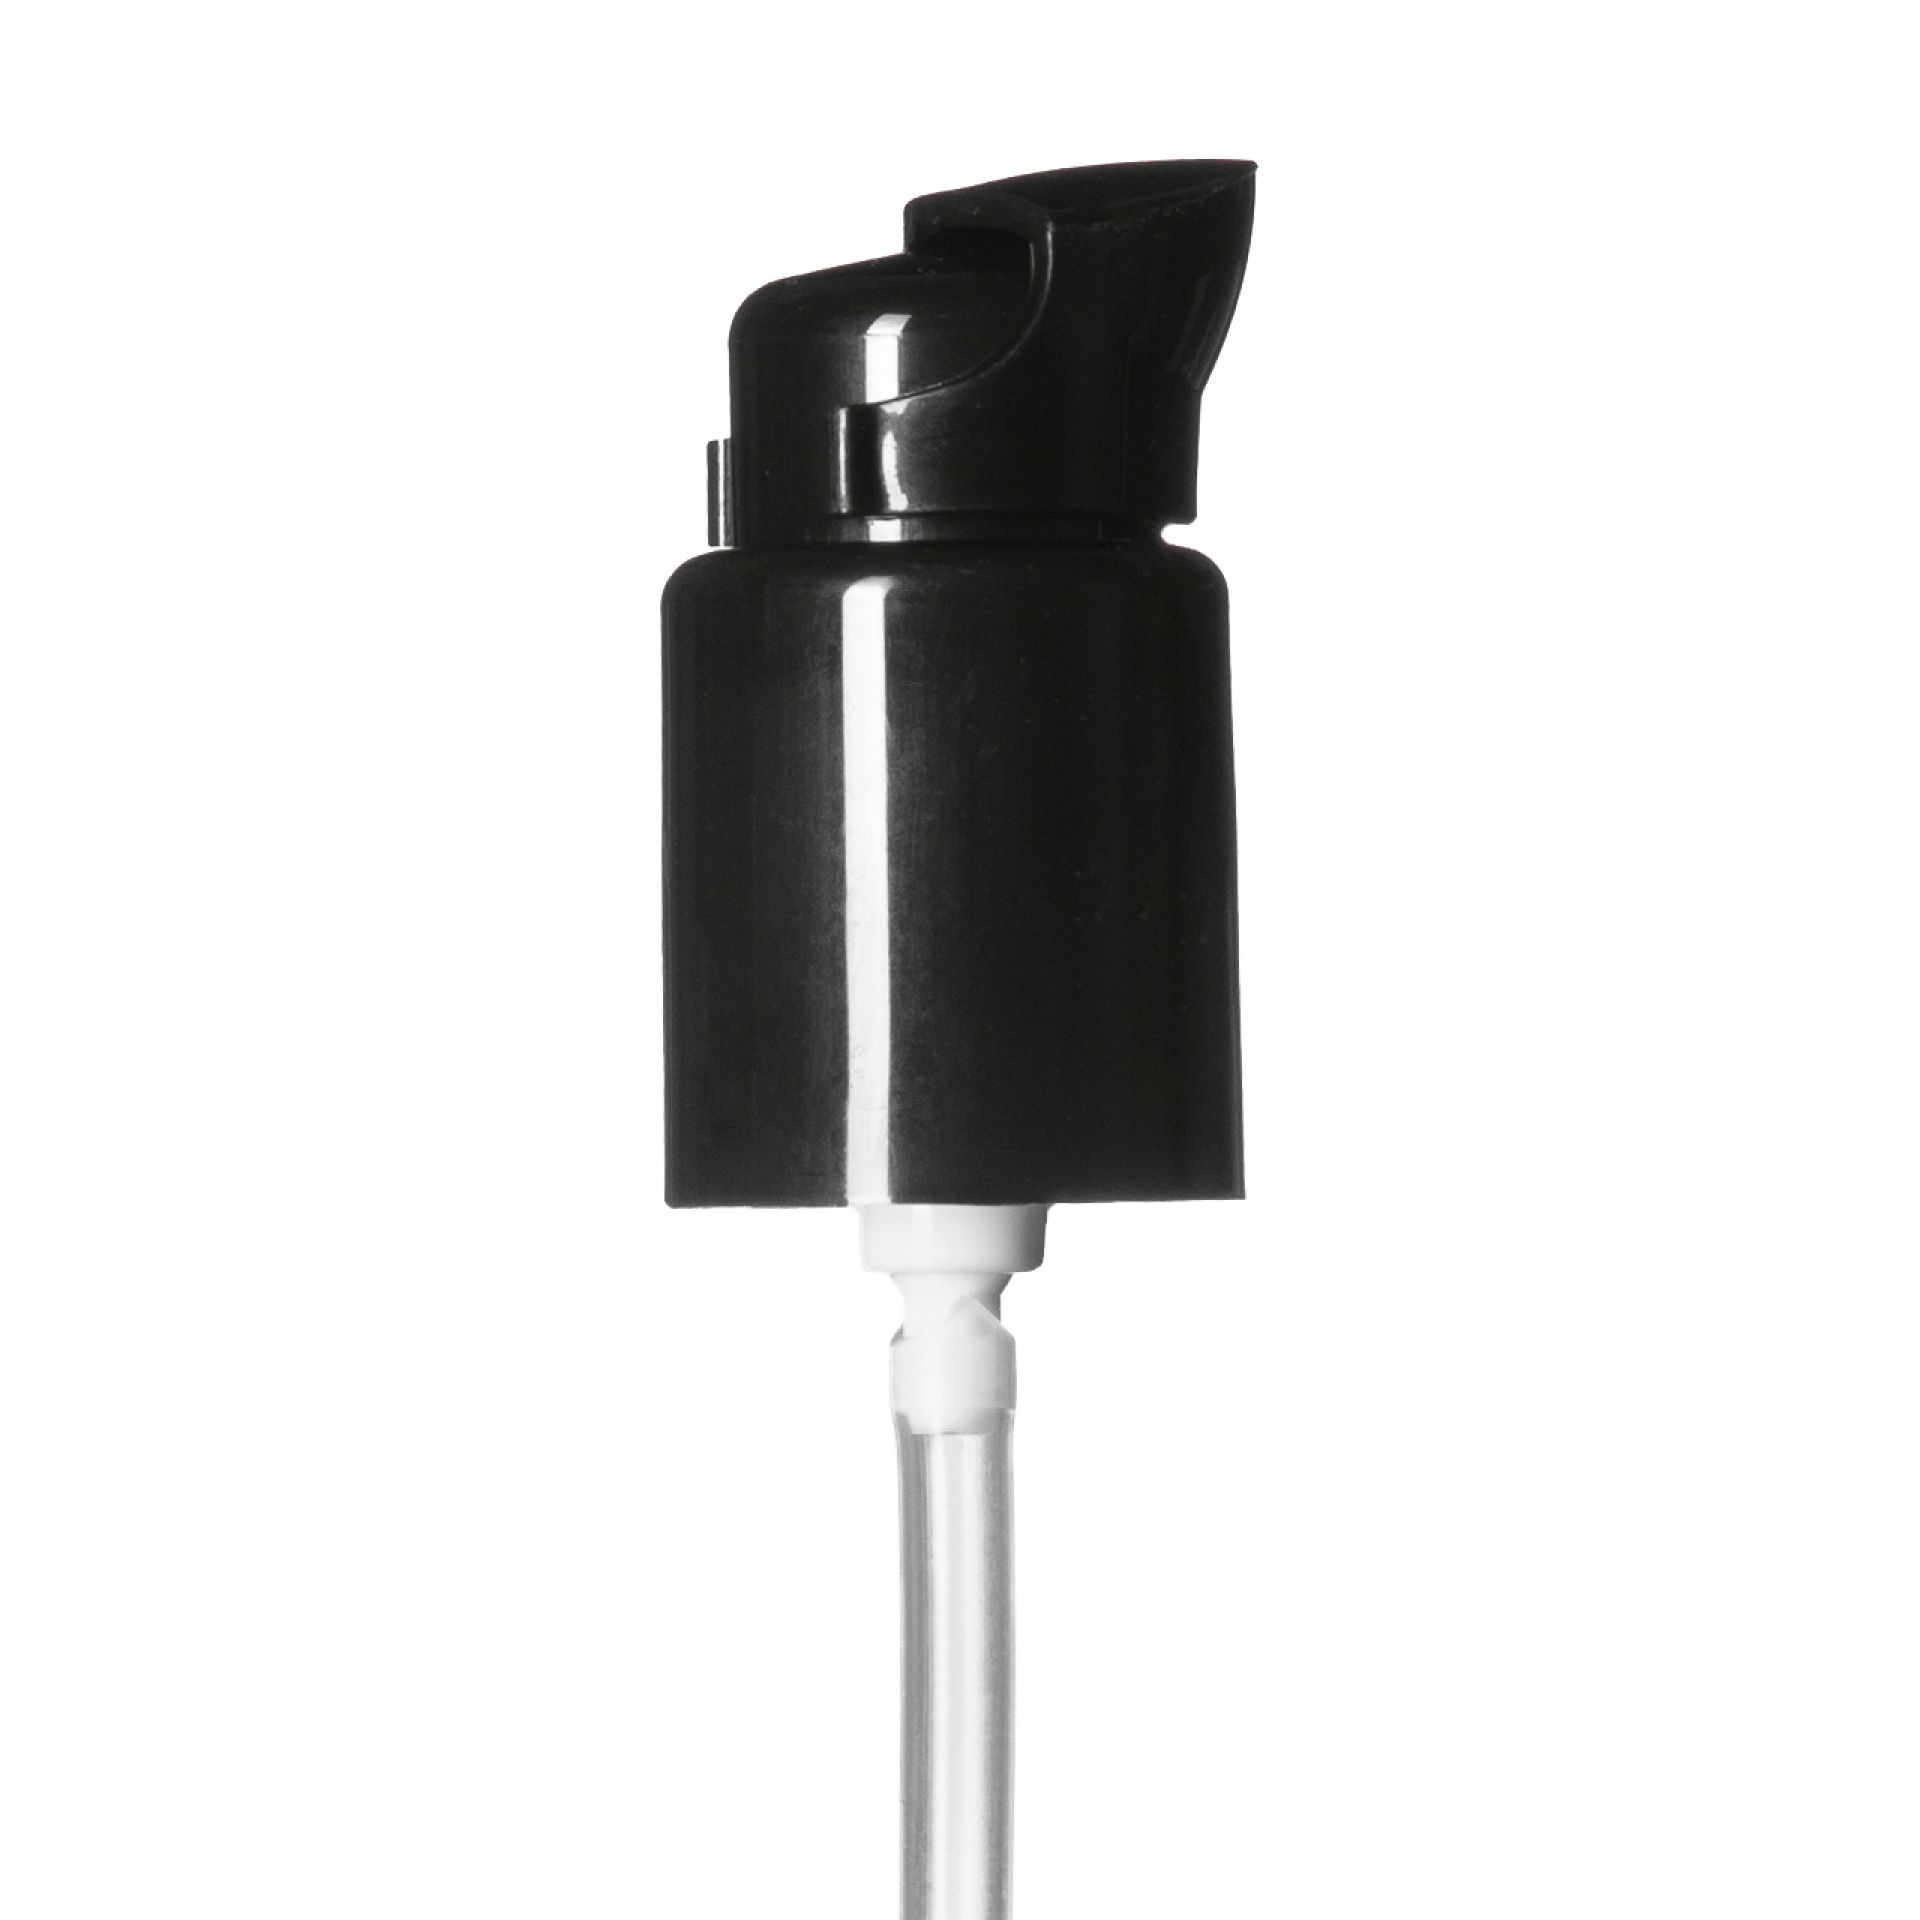 Lotion pump Metropolitan 18/415, PP, black, dose 0.15ml, black security clip (Victor 50)